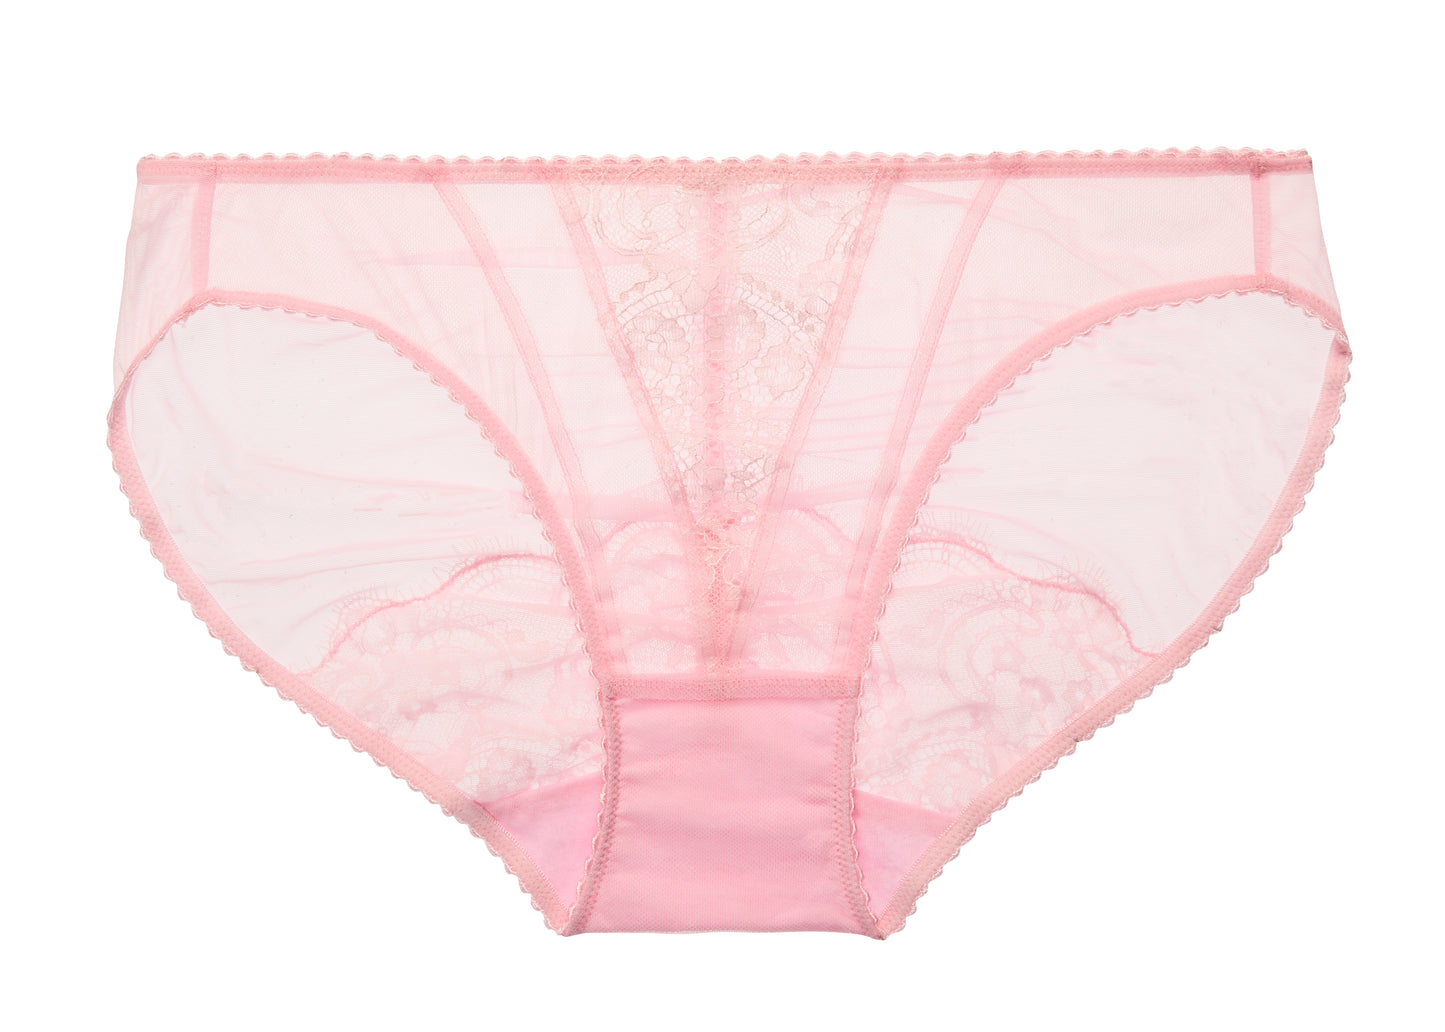 Muse Bikini in Cameo Pink By Dita Von Teese - sizes XS-XL